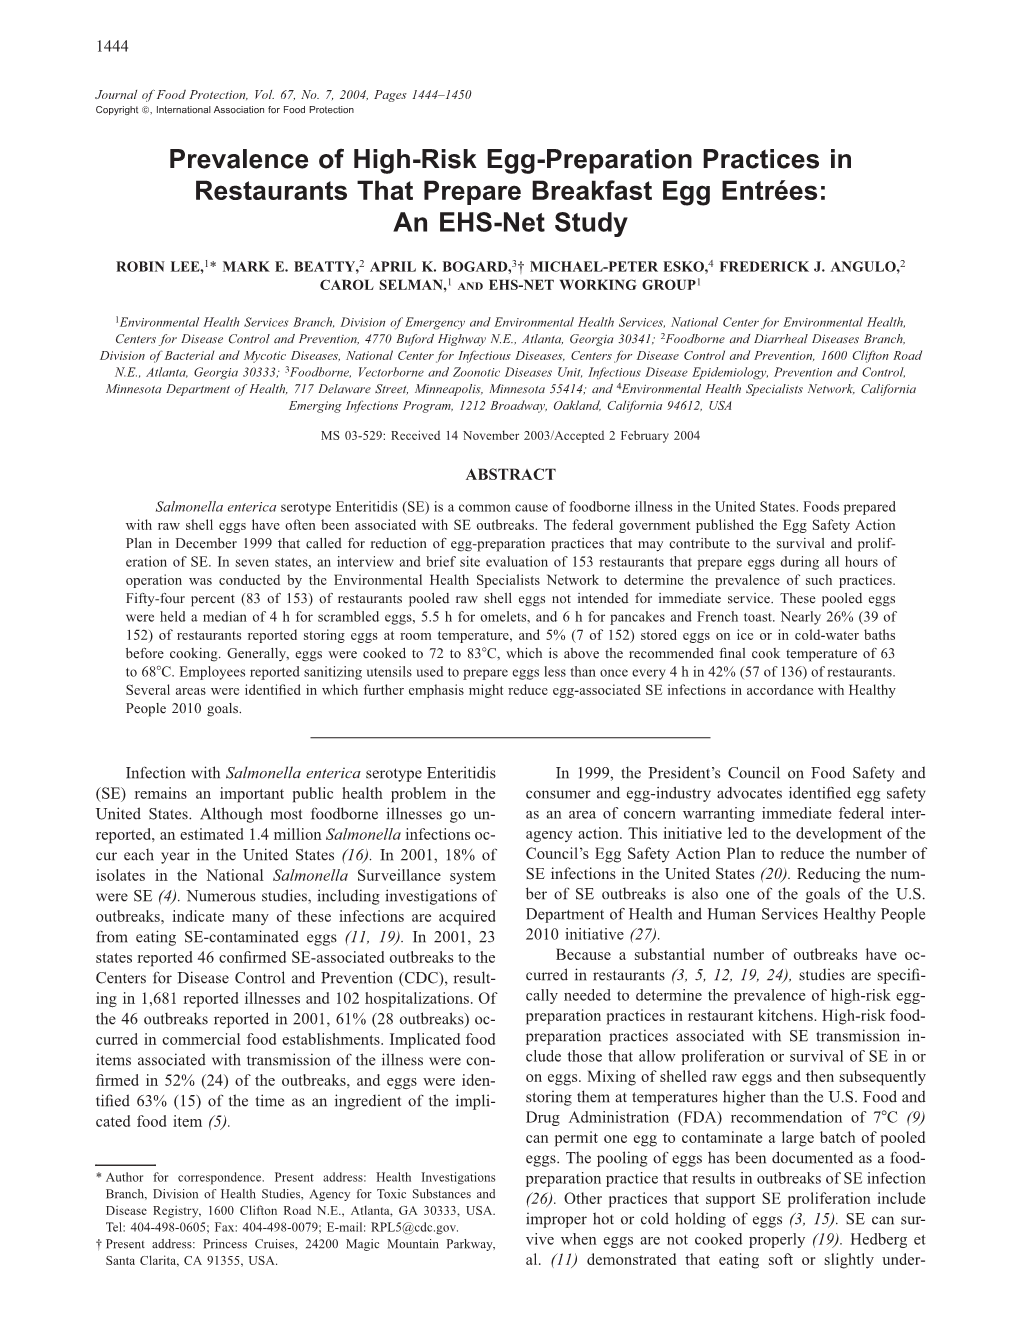 Prevalence of High-Risk Egg-Preparation Practices in Restaurants That Prepare Breakfast Egg Entre´Es: an EHS-Net Study